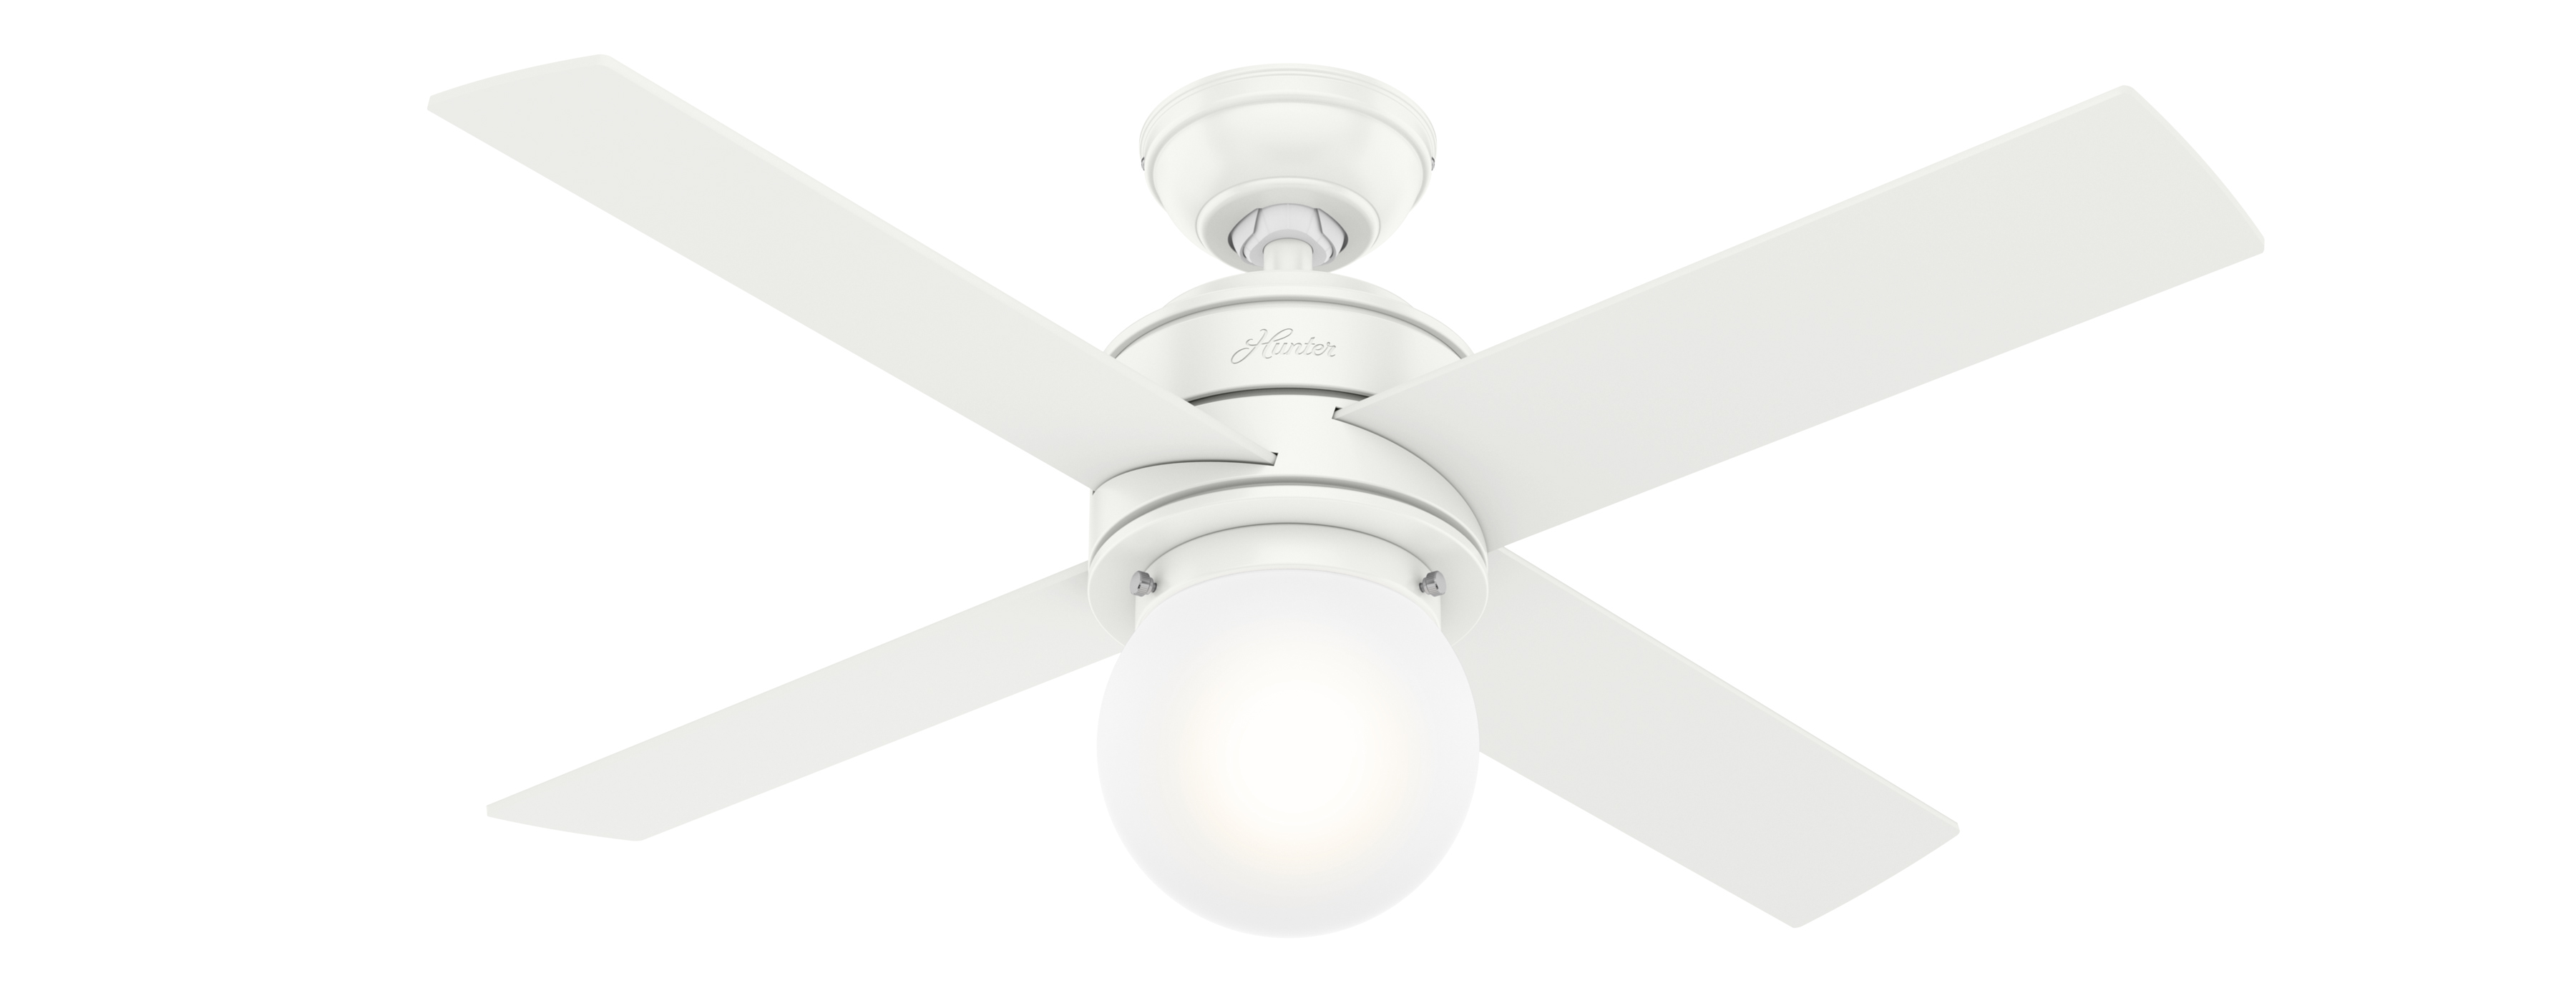 Hunter Fans 50275 Hepburn with LED Light 44 inch Ceiling Fan in Matte White